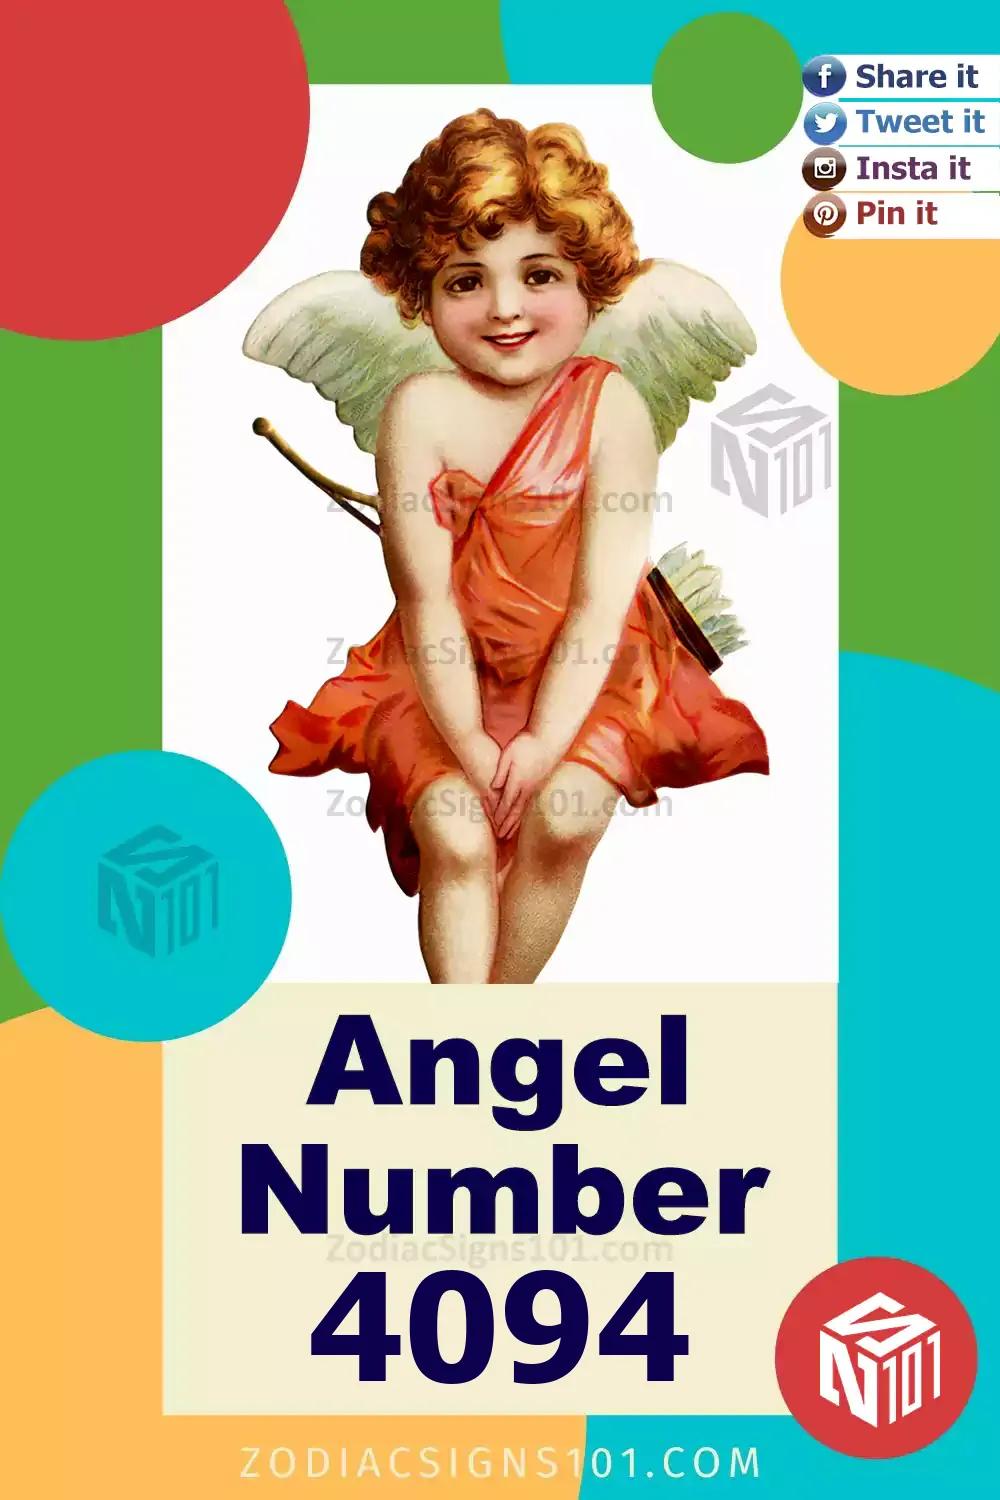 4094-Angel-Number-Meaning.jpg